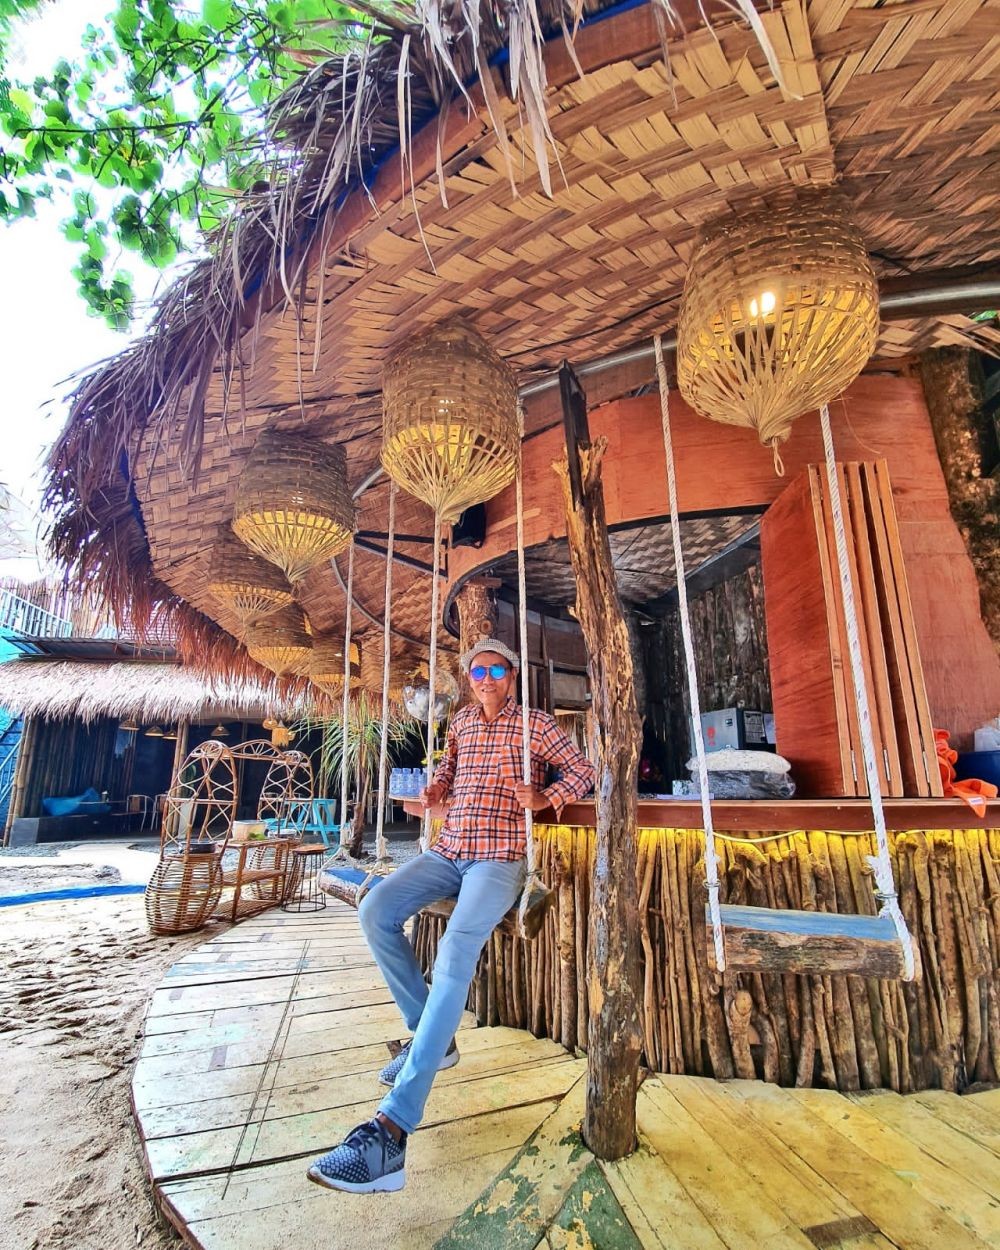 Healing di Kafe Tenank Berkonsep Pantai, Pasir Asli dari Bali